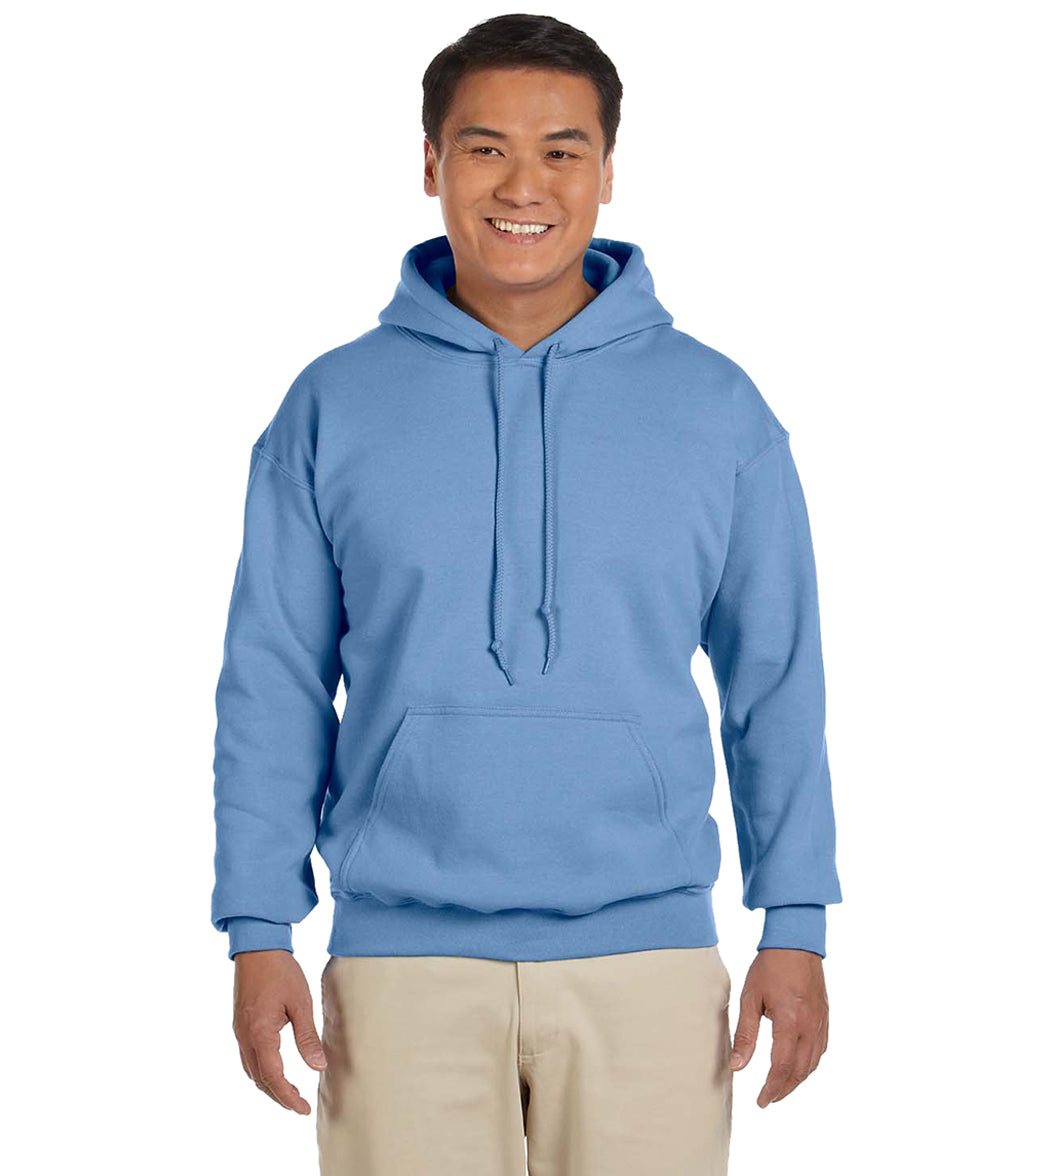 SwimOutlet Unisex Heavy Blend Hooded Sweatshirt